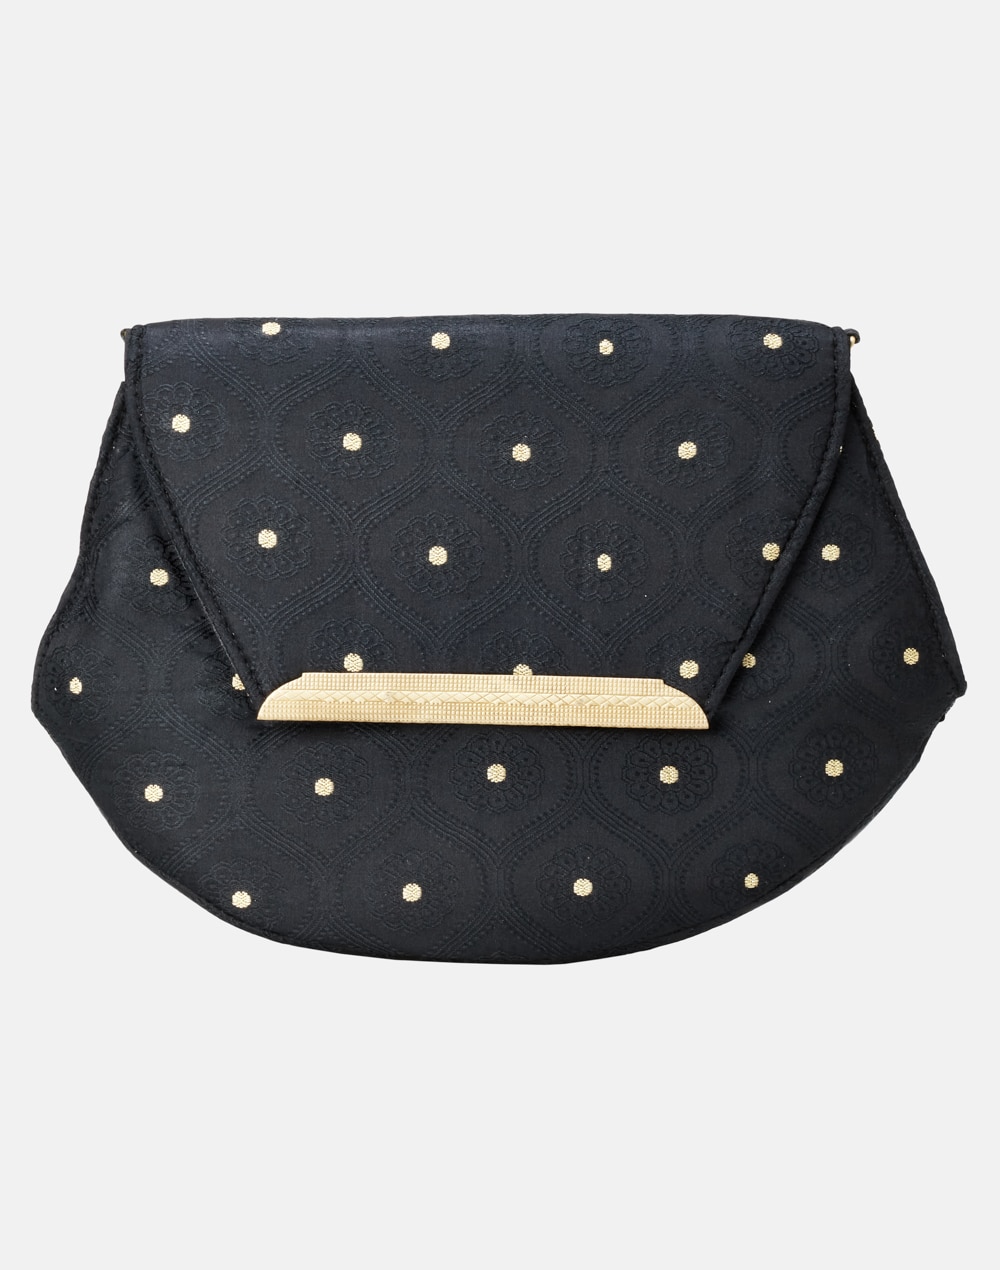 Fabric Black Clutch Bag